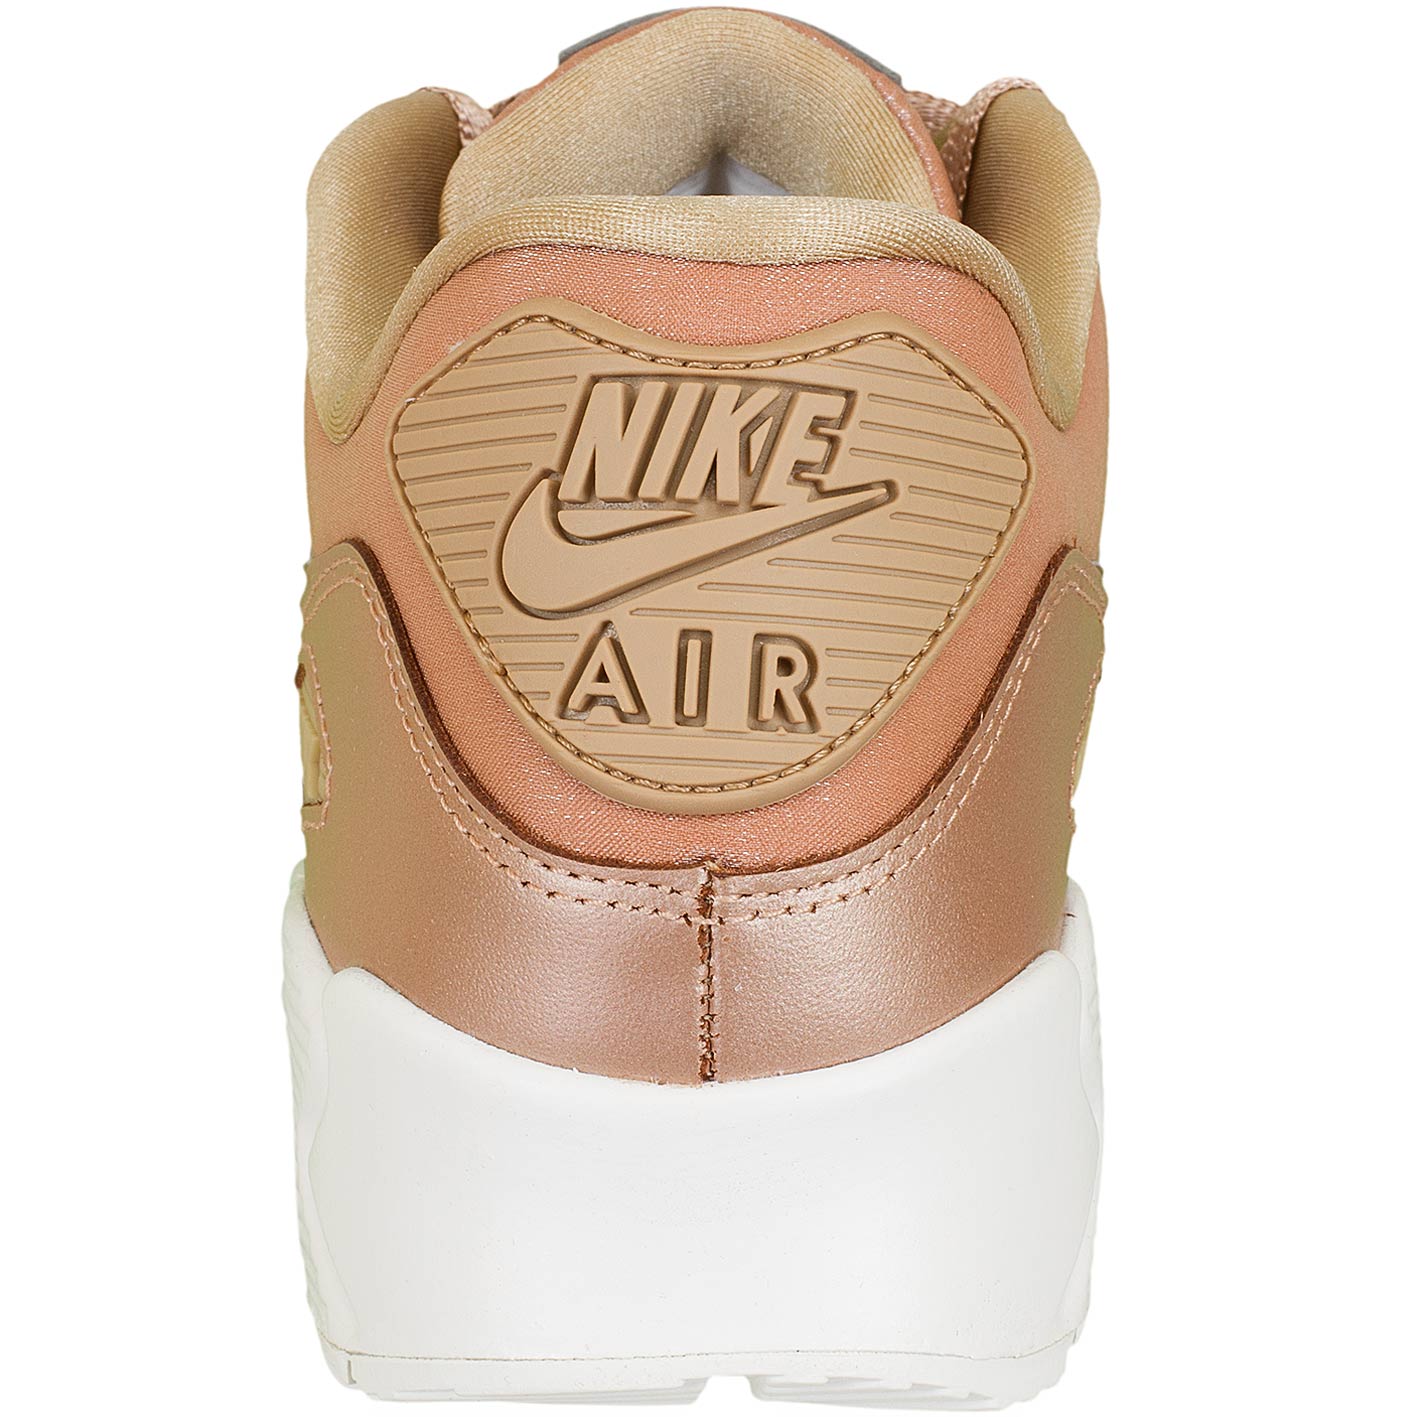 ☆ Nike Damen Sneaker Air Max 90 Premium mtlc bronze - hier bestellen!